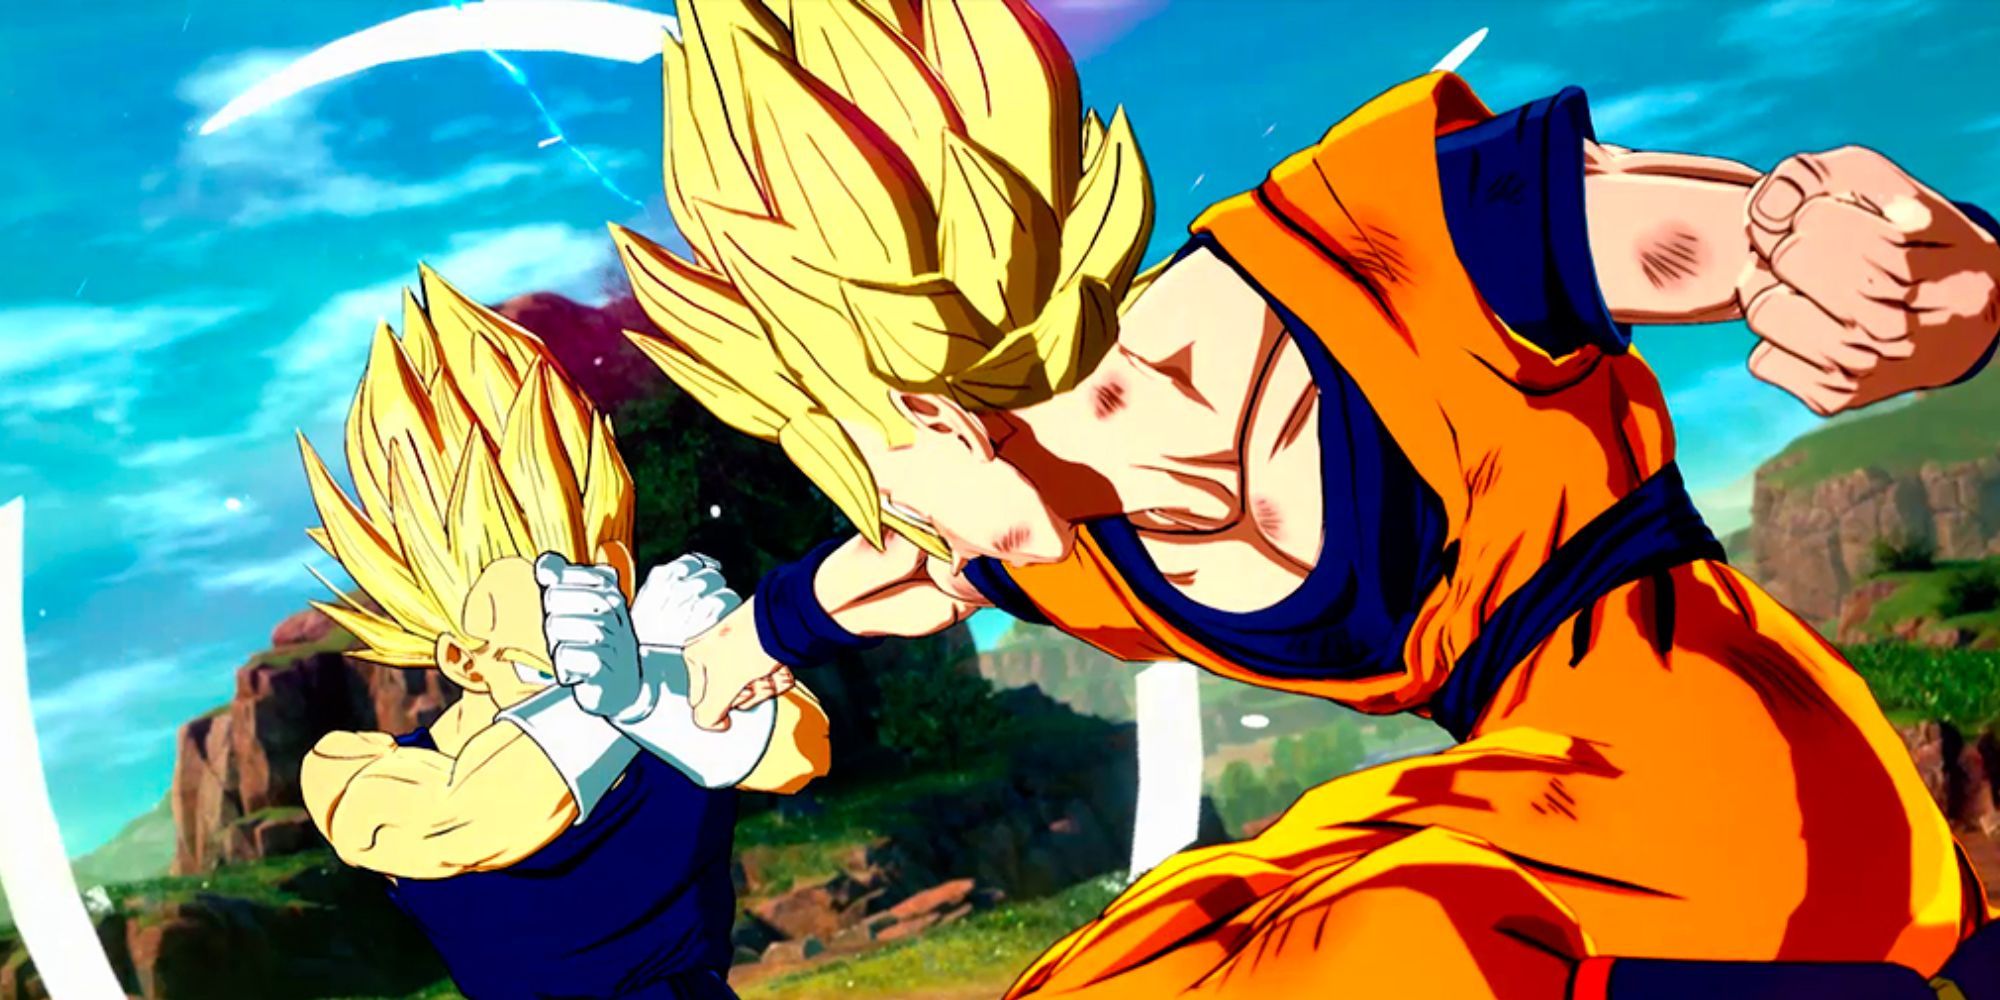 Goku and Vegeta as Super Saiyan's in Dragon Ball: Sparking Zero.